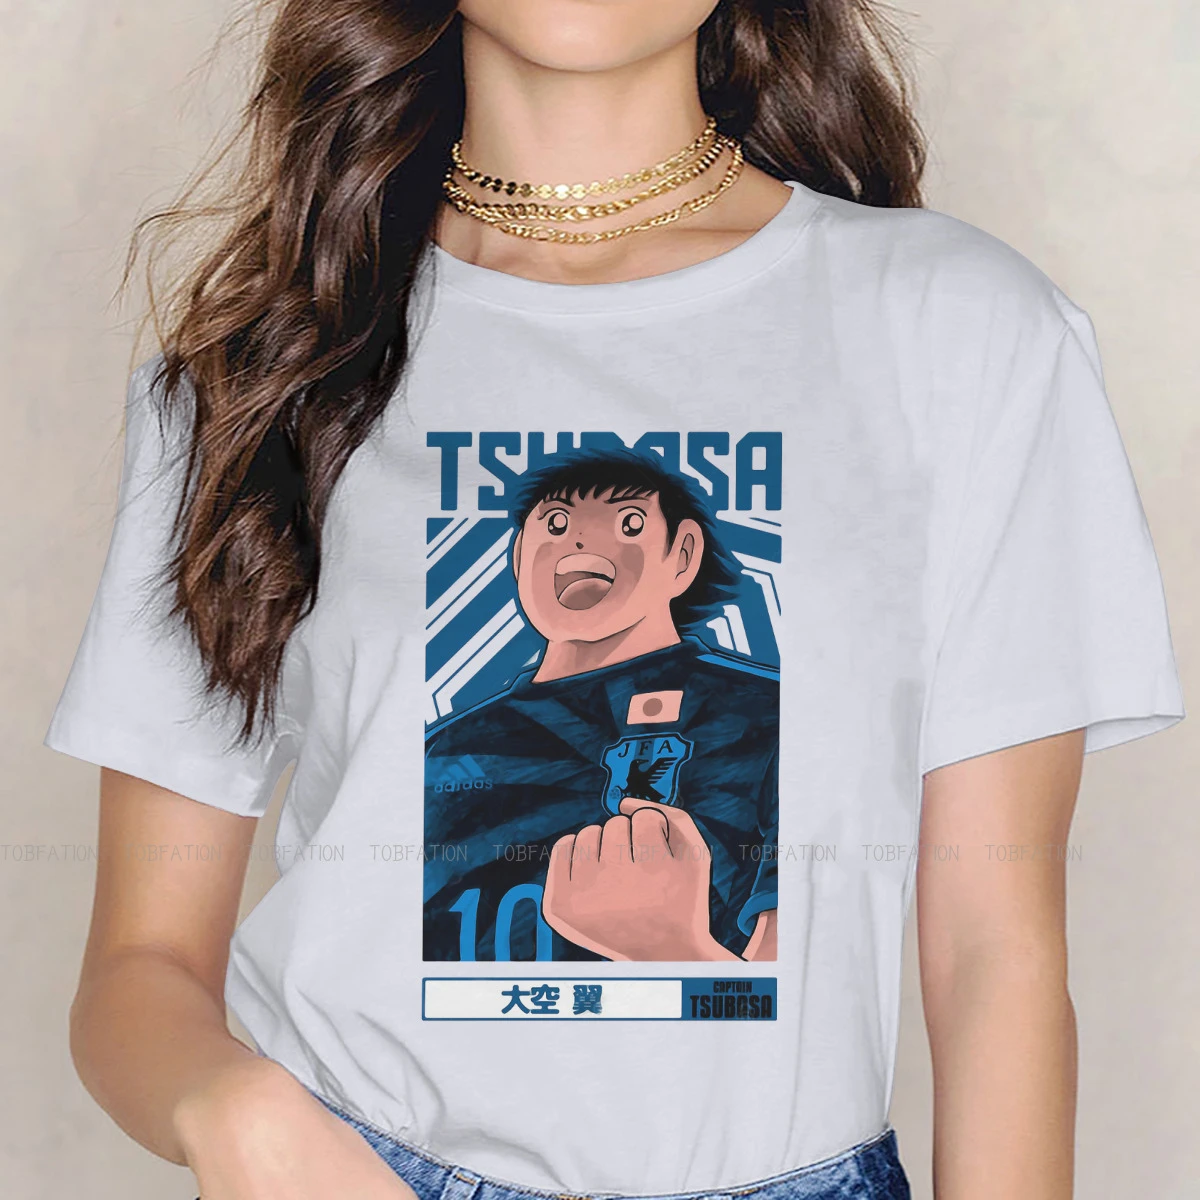 Tsubasa Ozora Women's TShirt Captain Tsubasa Football Anime Girls Basic  Tops O neck Female T Shirt 4XL Humor Fashion Gift|T-Shirts| - AliExpress